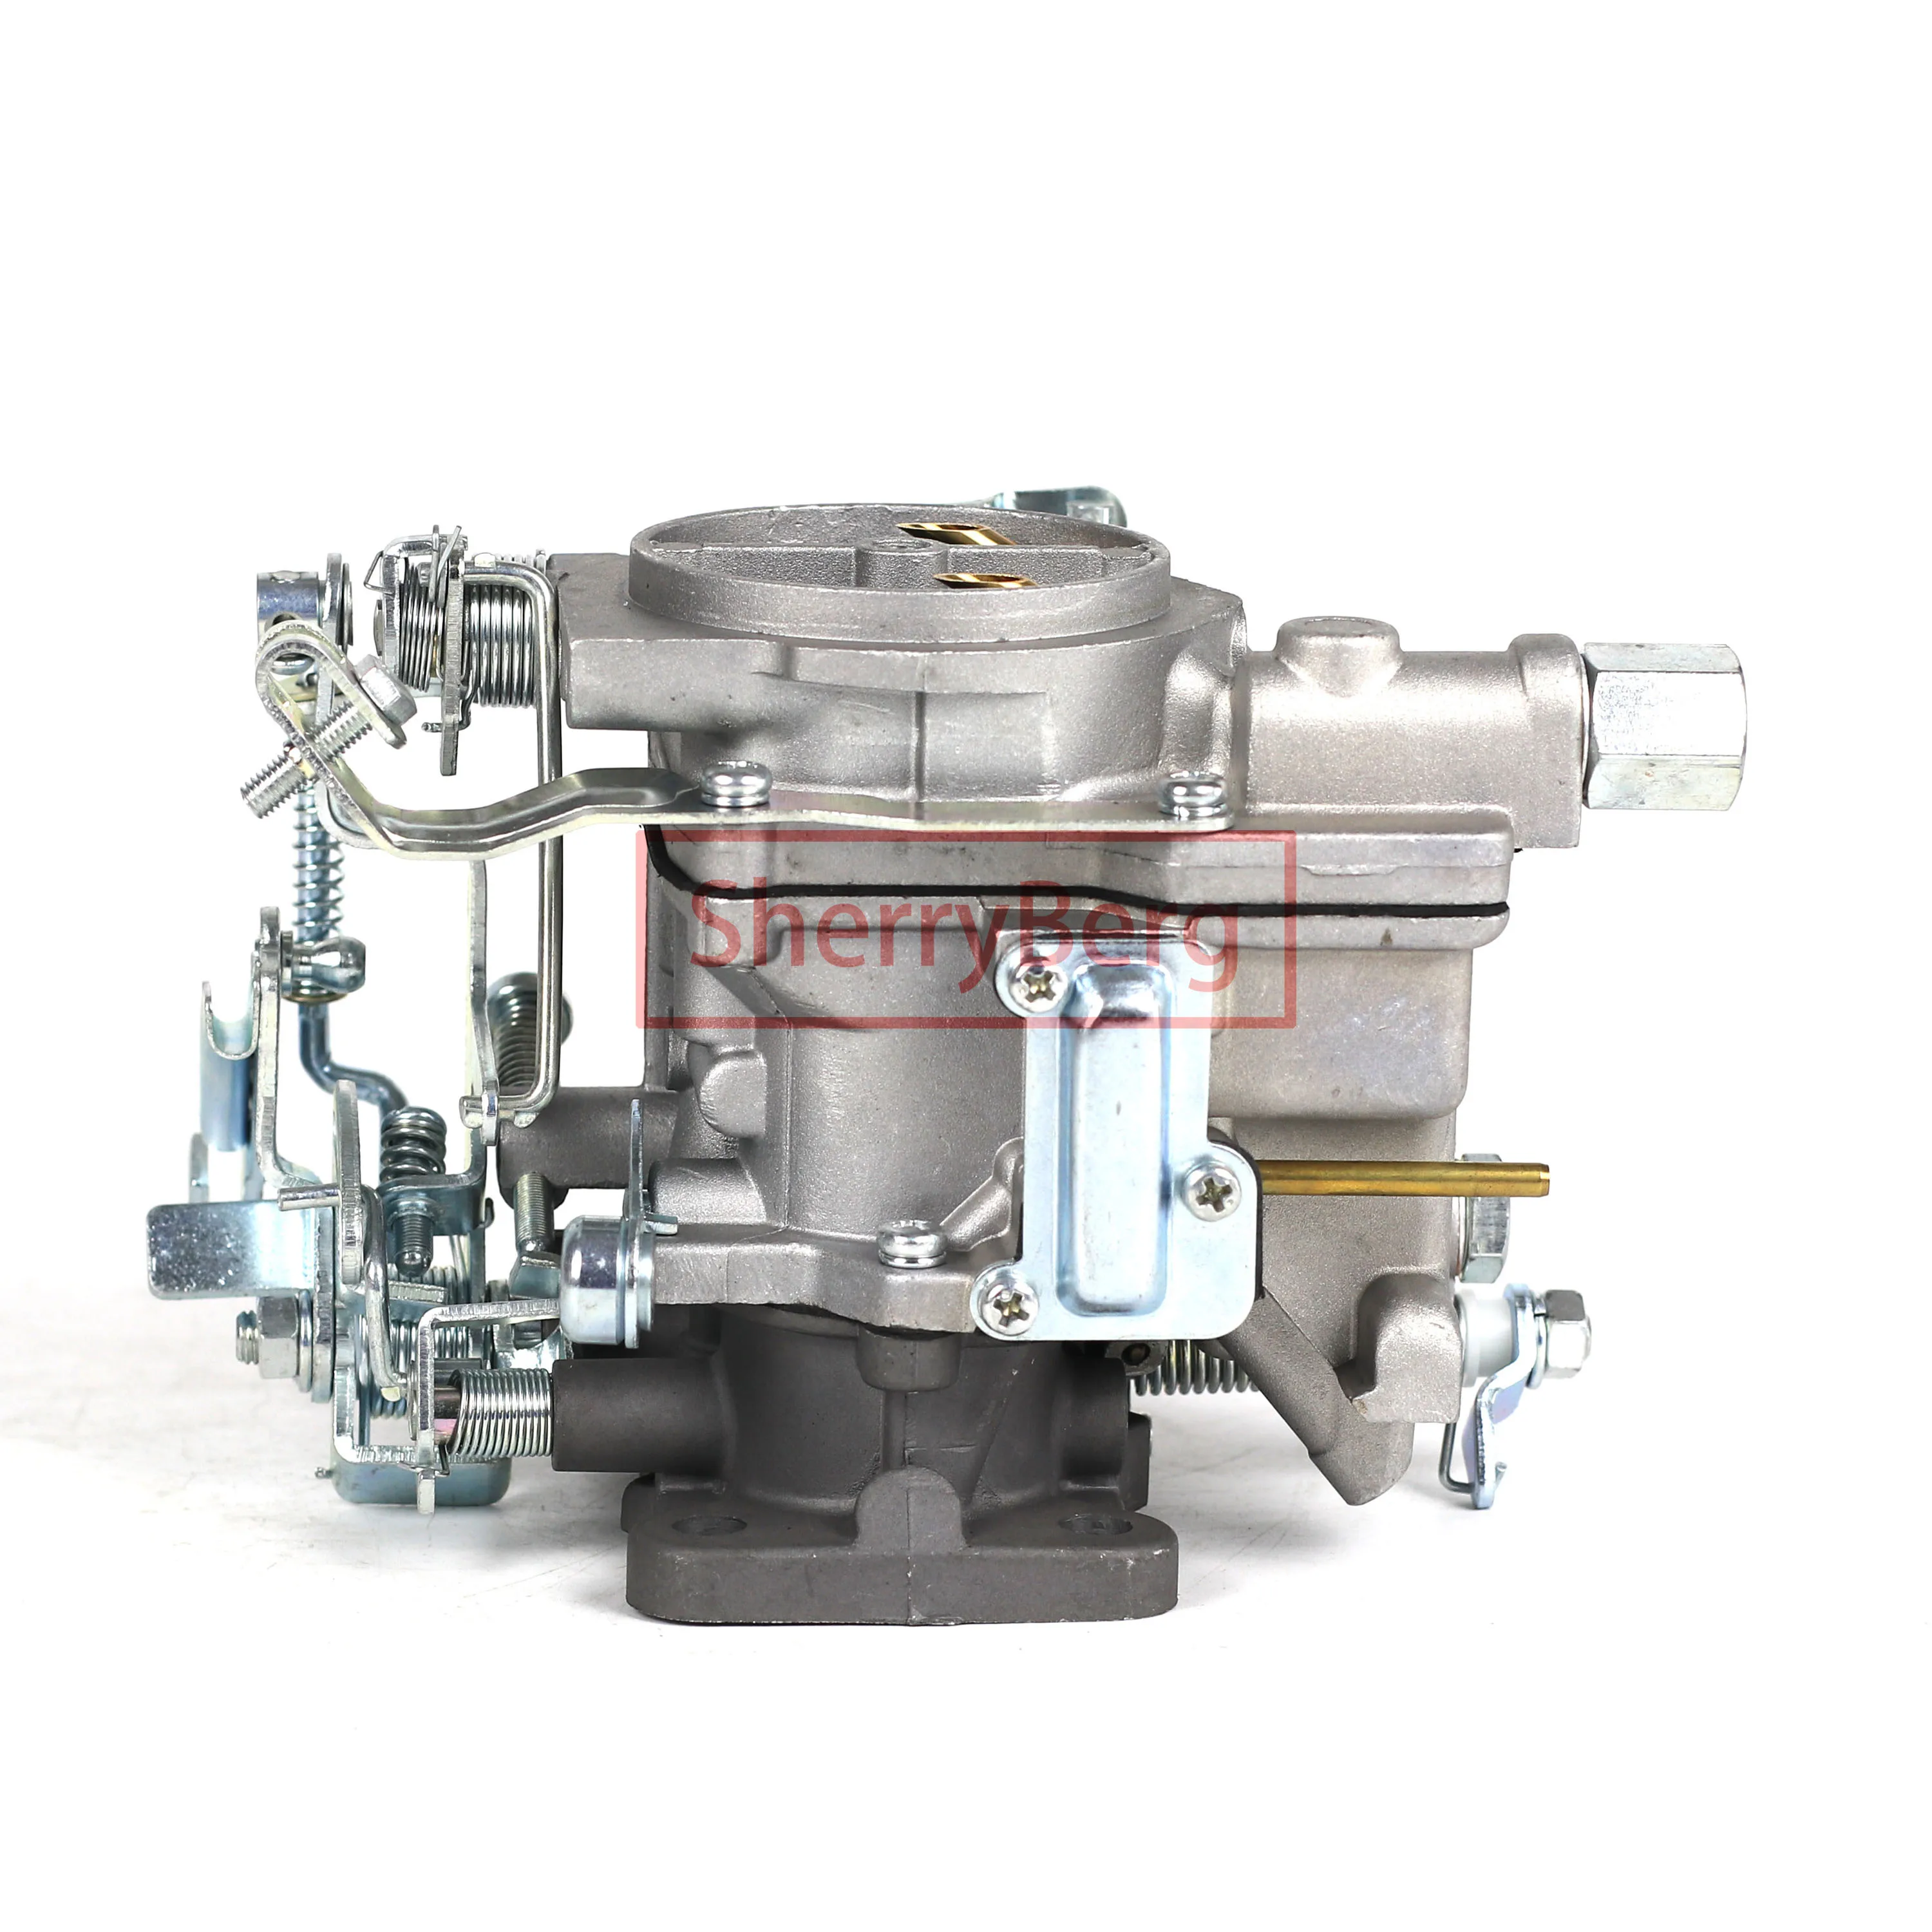 

SherryBerg Carburettor Carburetor Carb forToyota Engine 3K 4K Part Number 21100-24034 21100-24035 Top Quality OEM Product